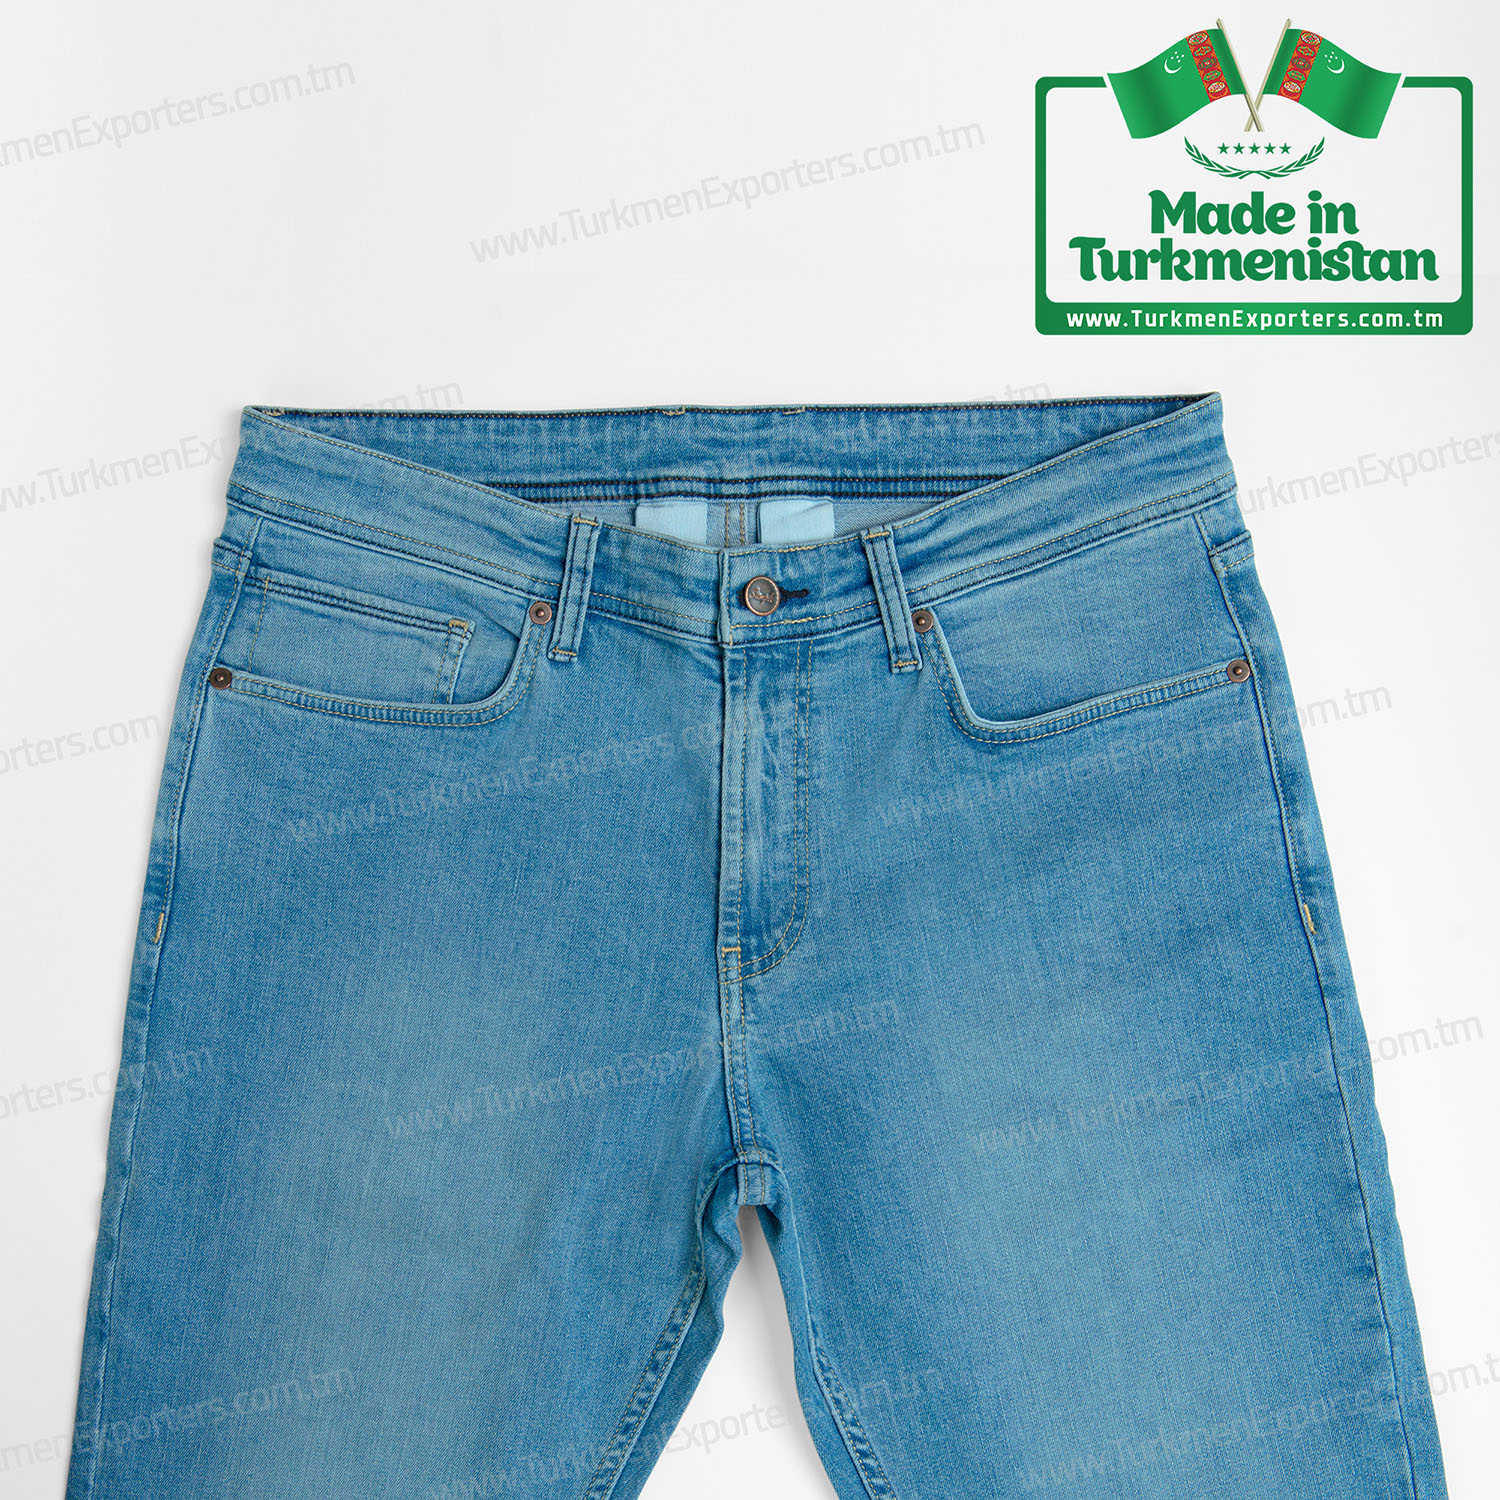 Men's jeans in Turkmenistan wholesale for export | Turkmen Export, Import & Trading Services Company